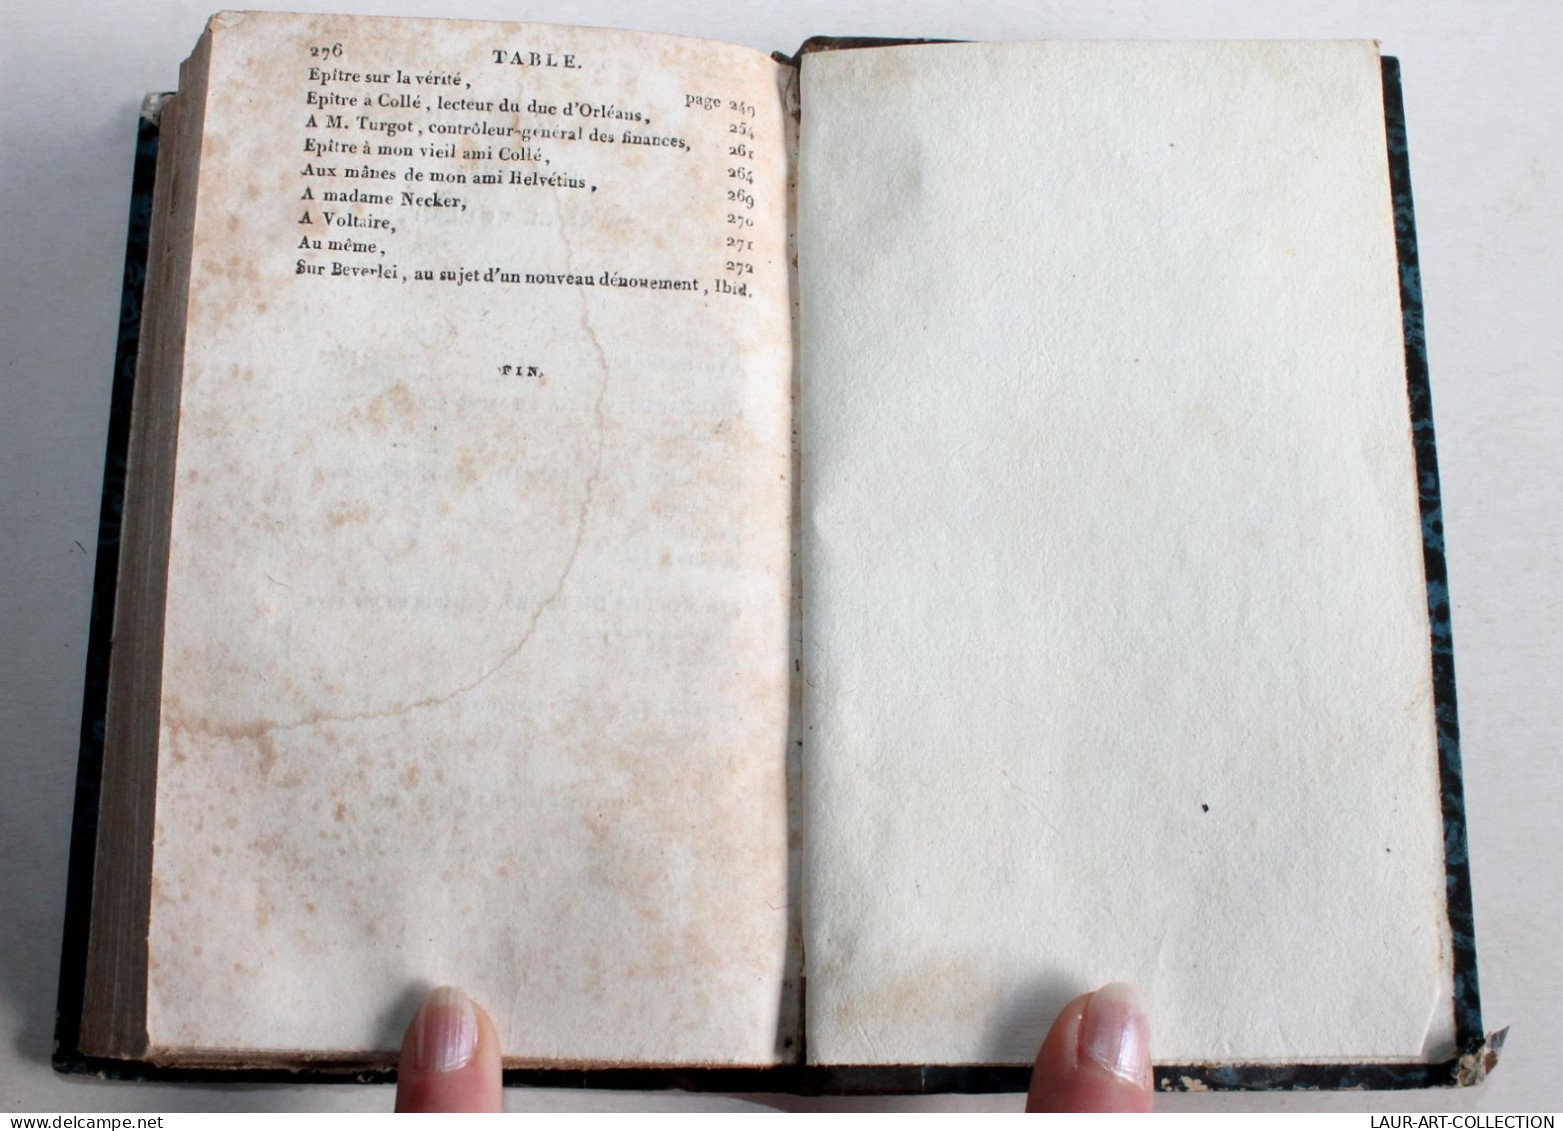 PIECE DE THEATRE OEUVRES CHOISIES DE SAURIN EDITION STEREOTYPE 1820 FIRMIN DIDOT / ANCIEN LIVRE XIXe SIECLE (1803.100) - Französische Autoren